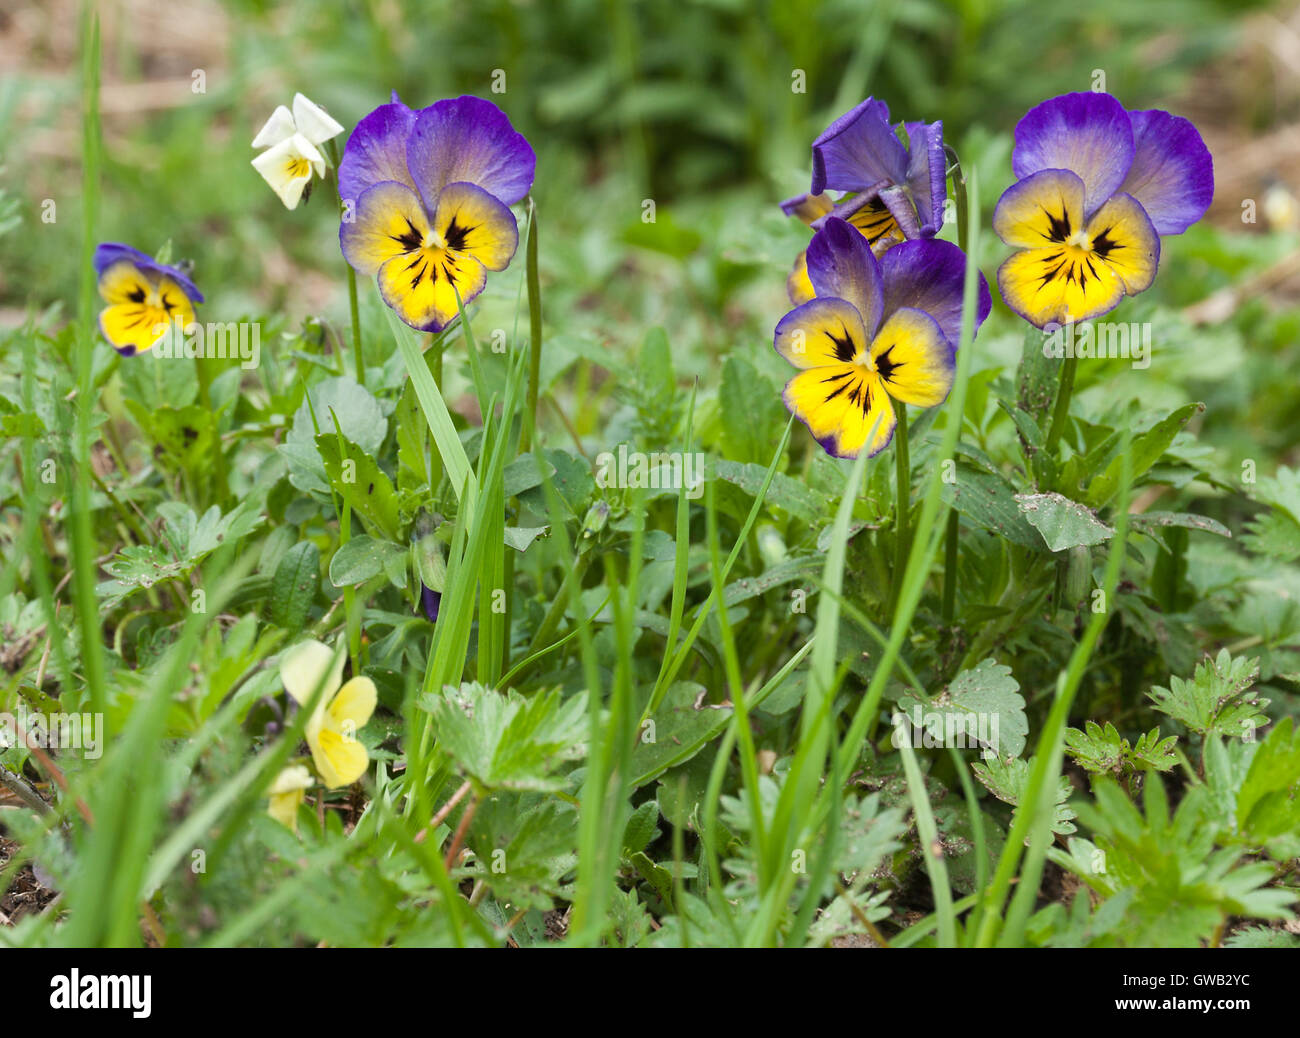 Botanic gardening plant nature image: pansy (viola tricolor, Viola cornuta) flowers closeup among green plants Stock Photo